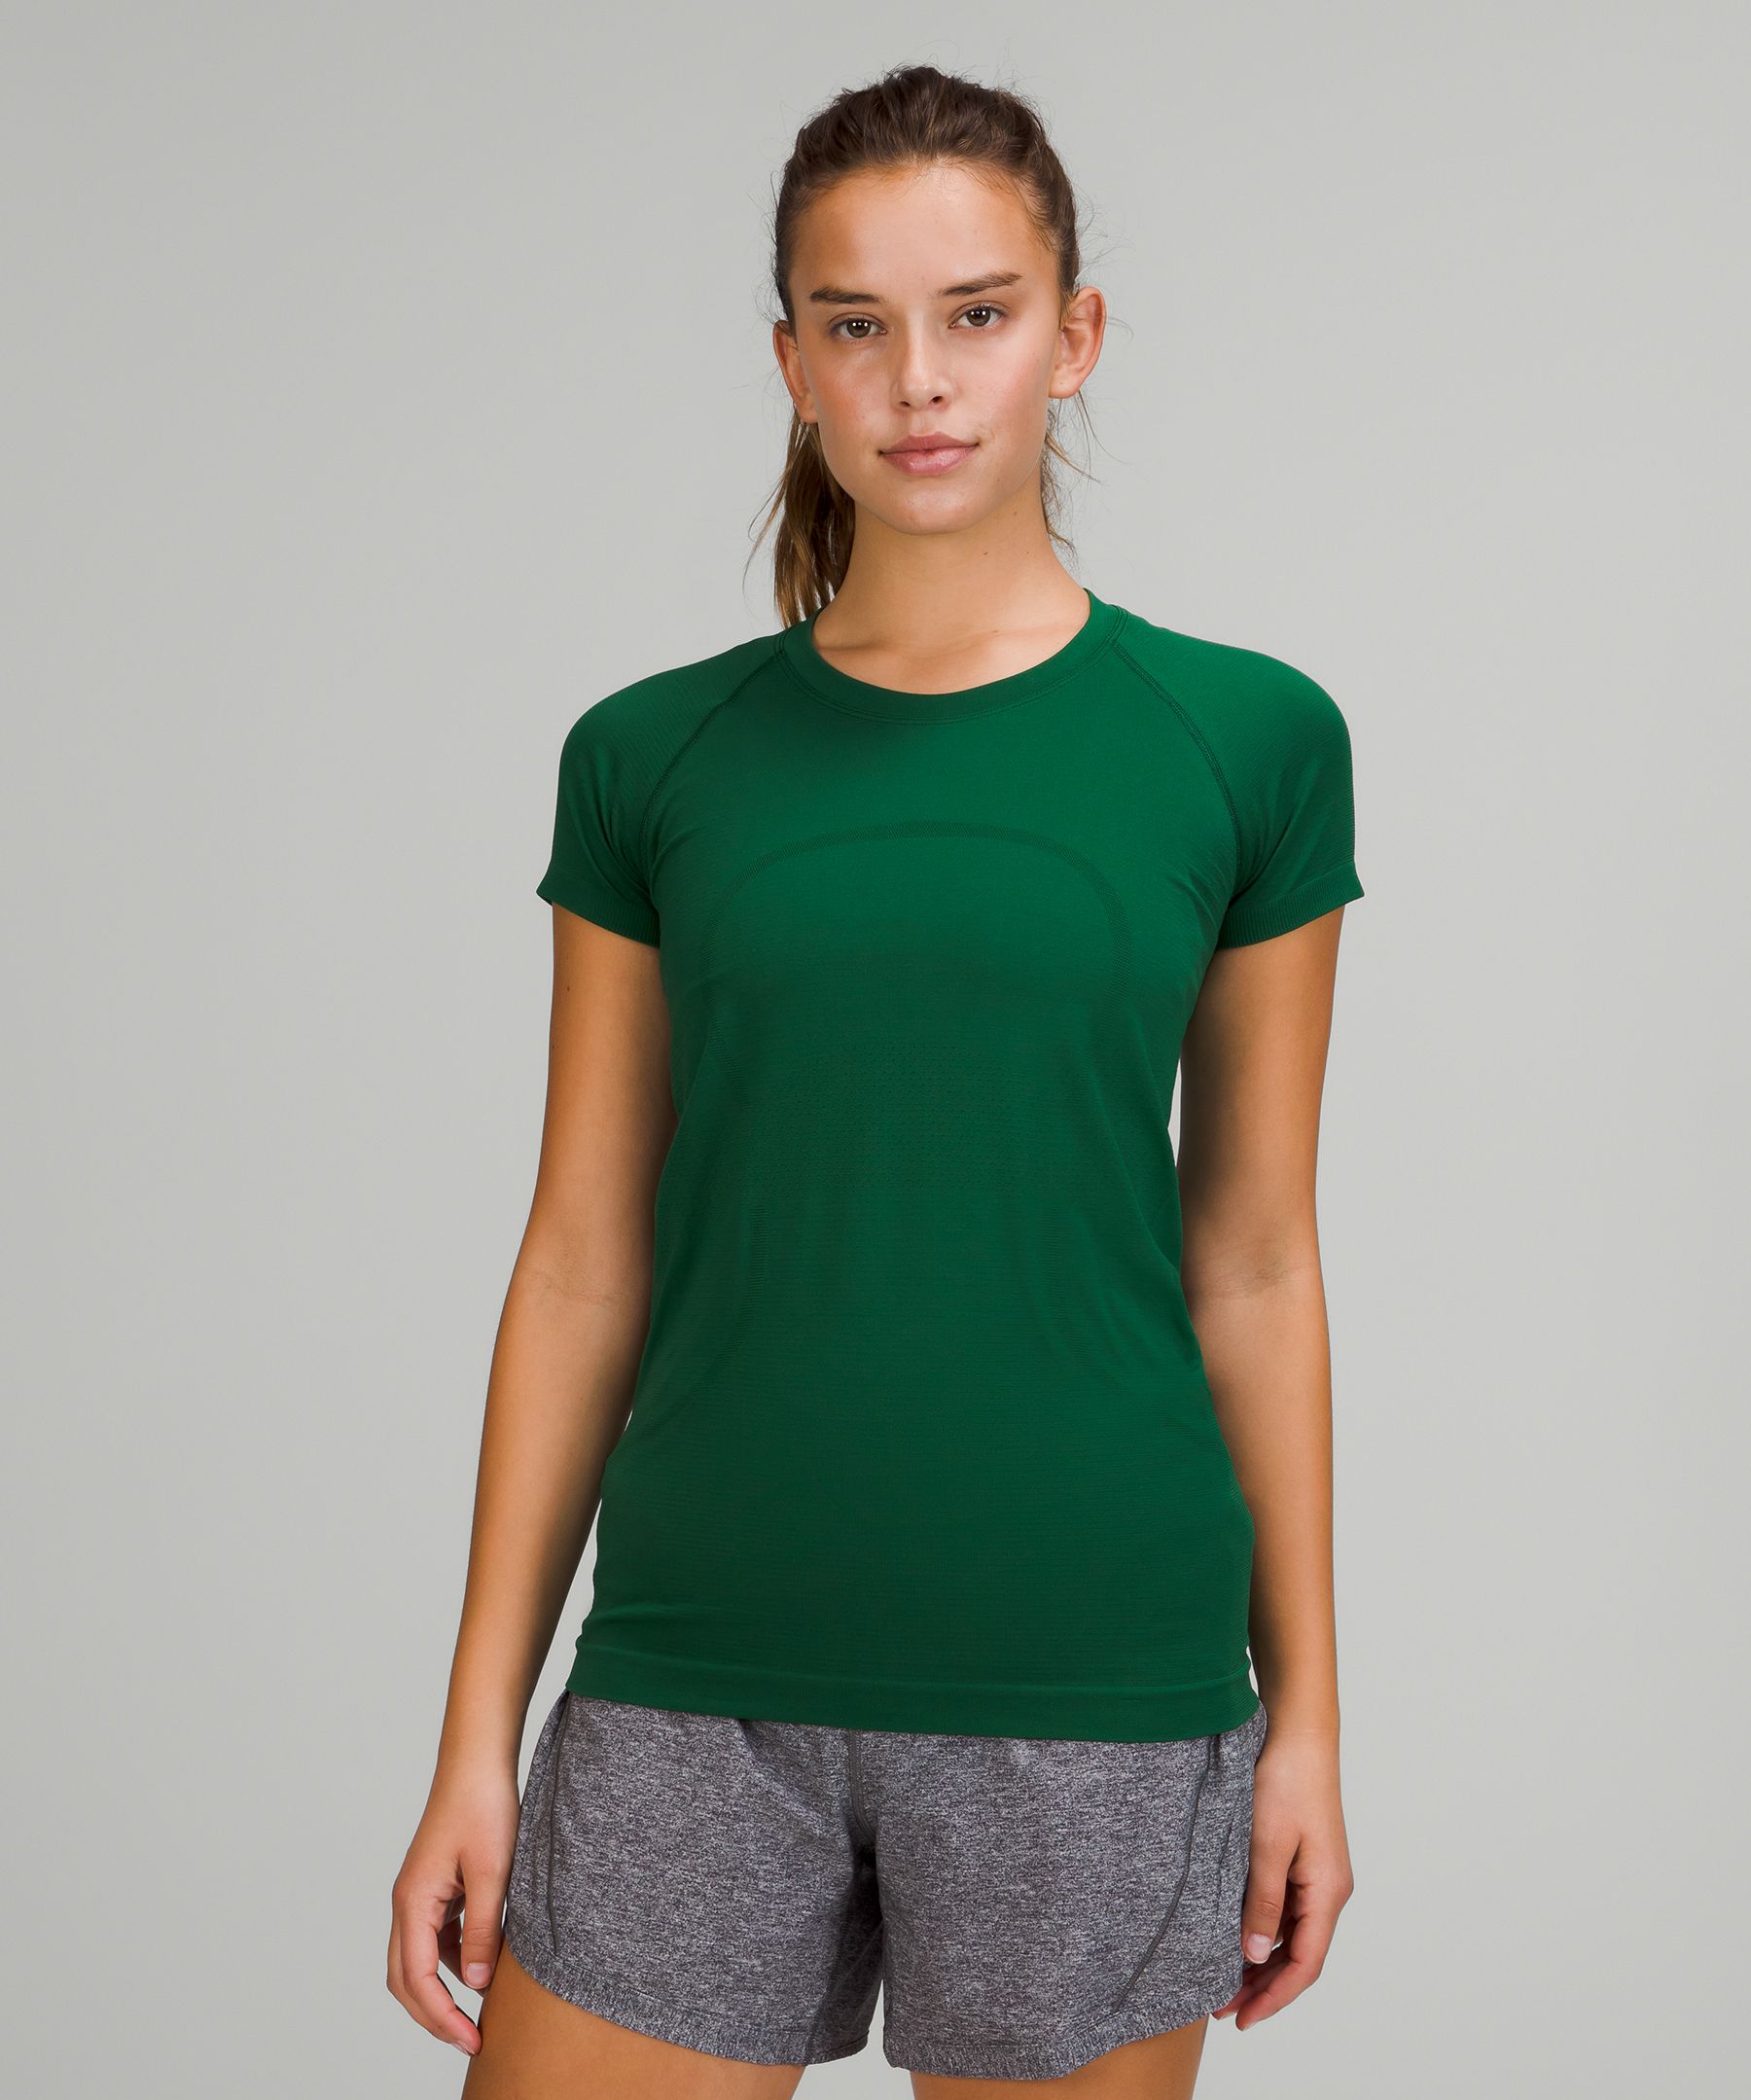 Lululemon Swiftly Tech Short Sleeve Shirt 2.0 In Everglade Green/everglade Green